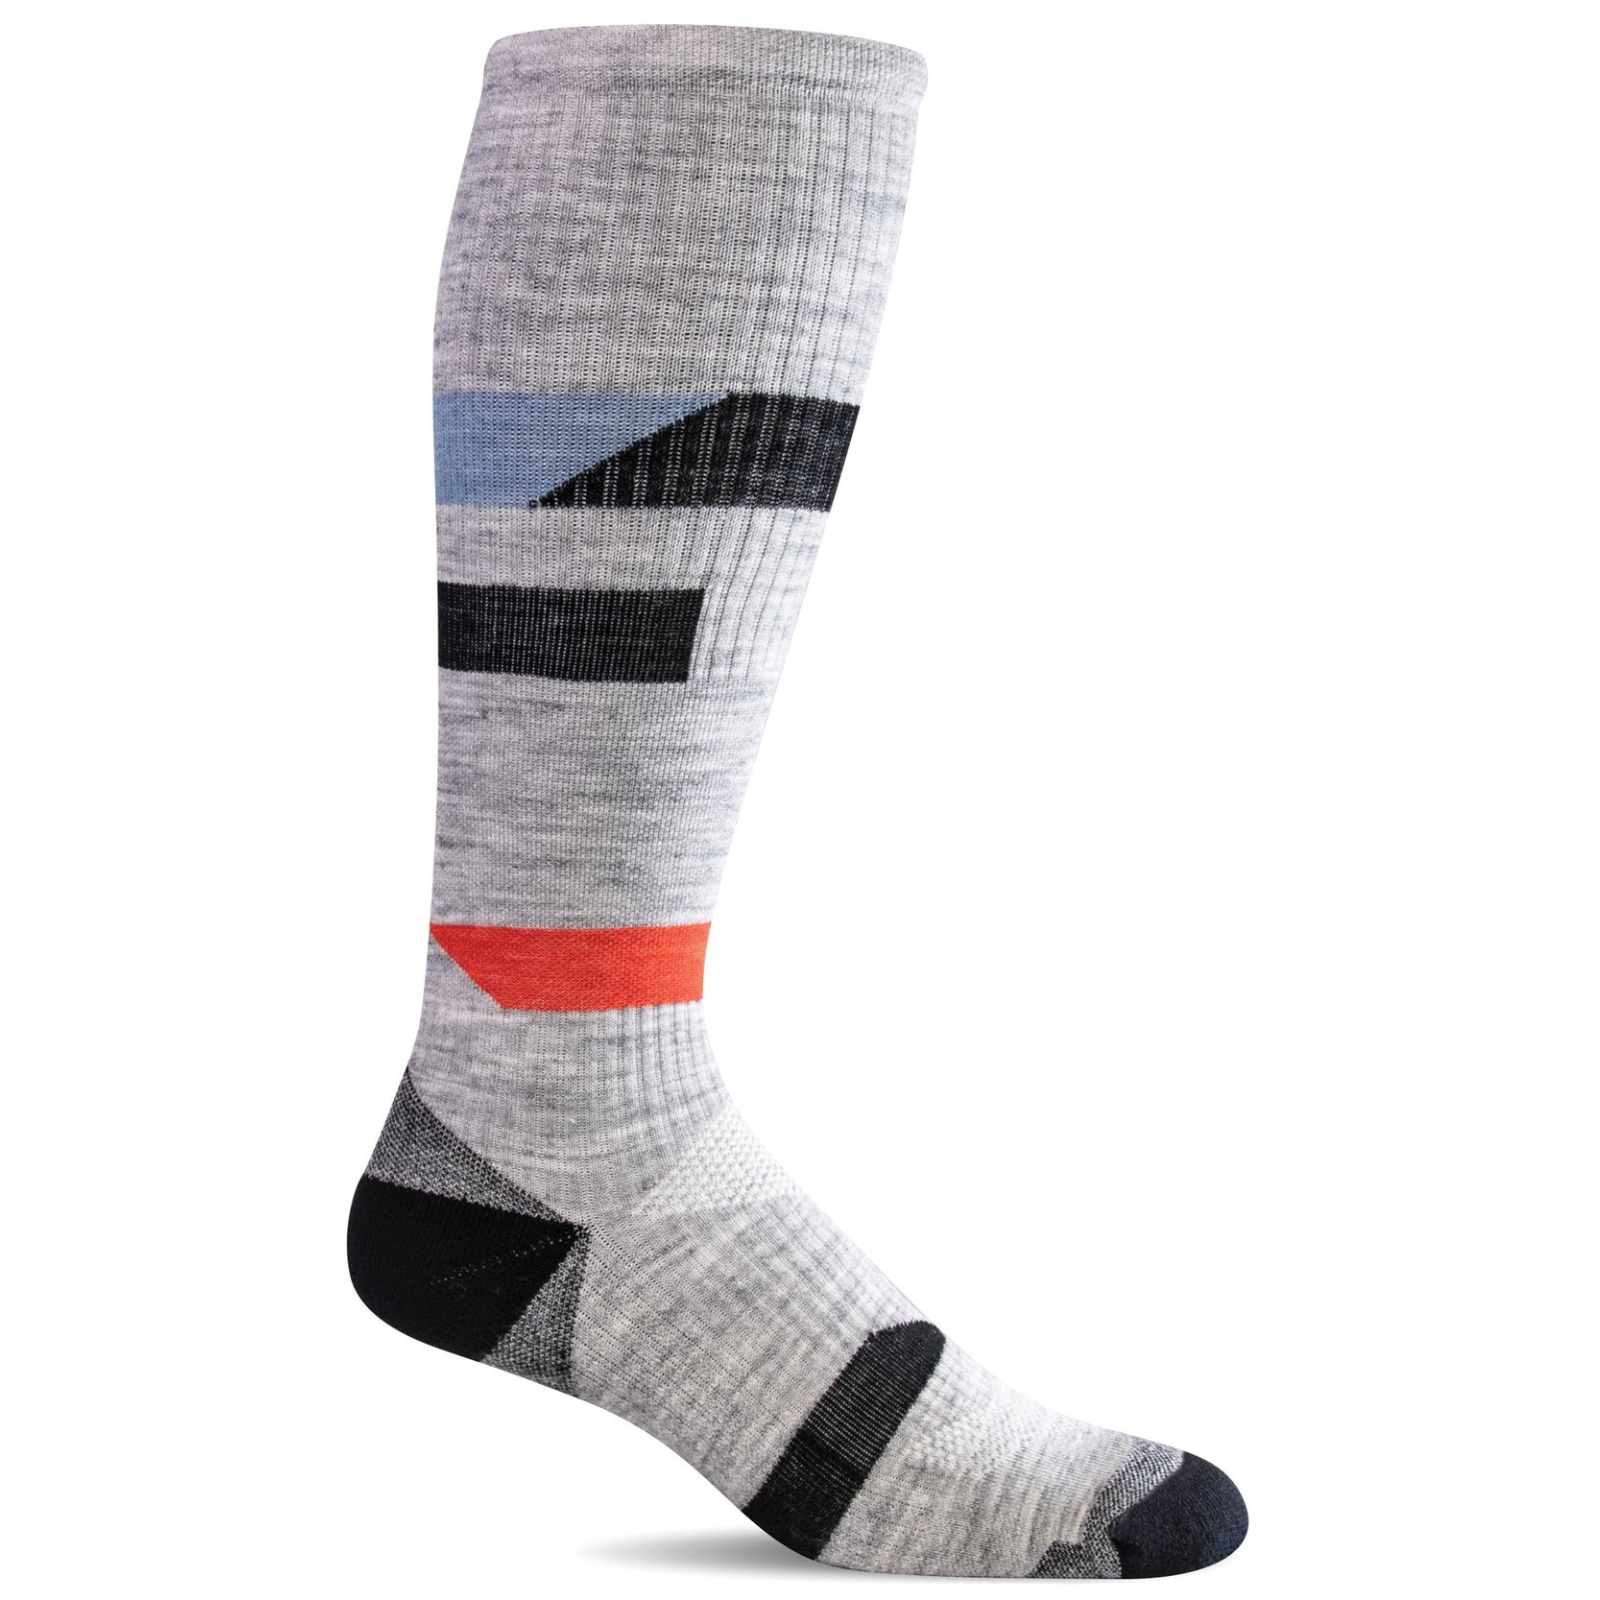 Sockwell Traverse OTC moderate graduated compression (15-20 mmHg) men's light gray knee high sock